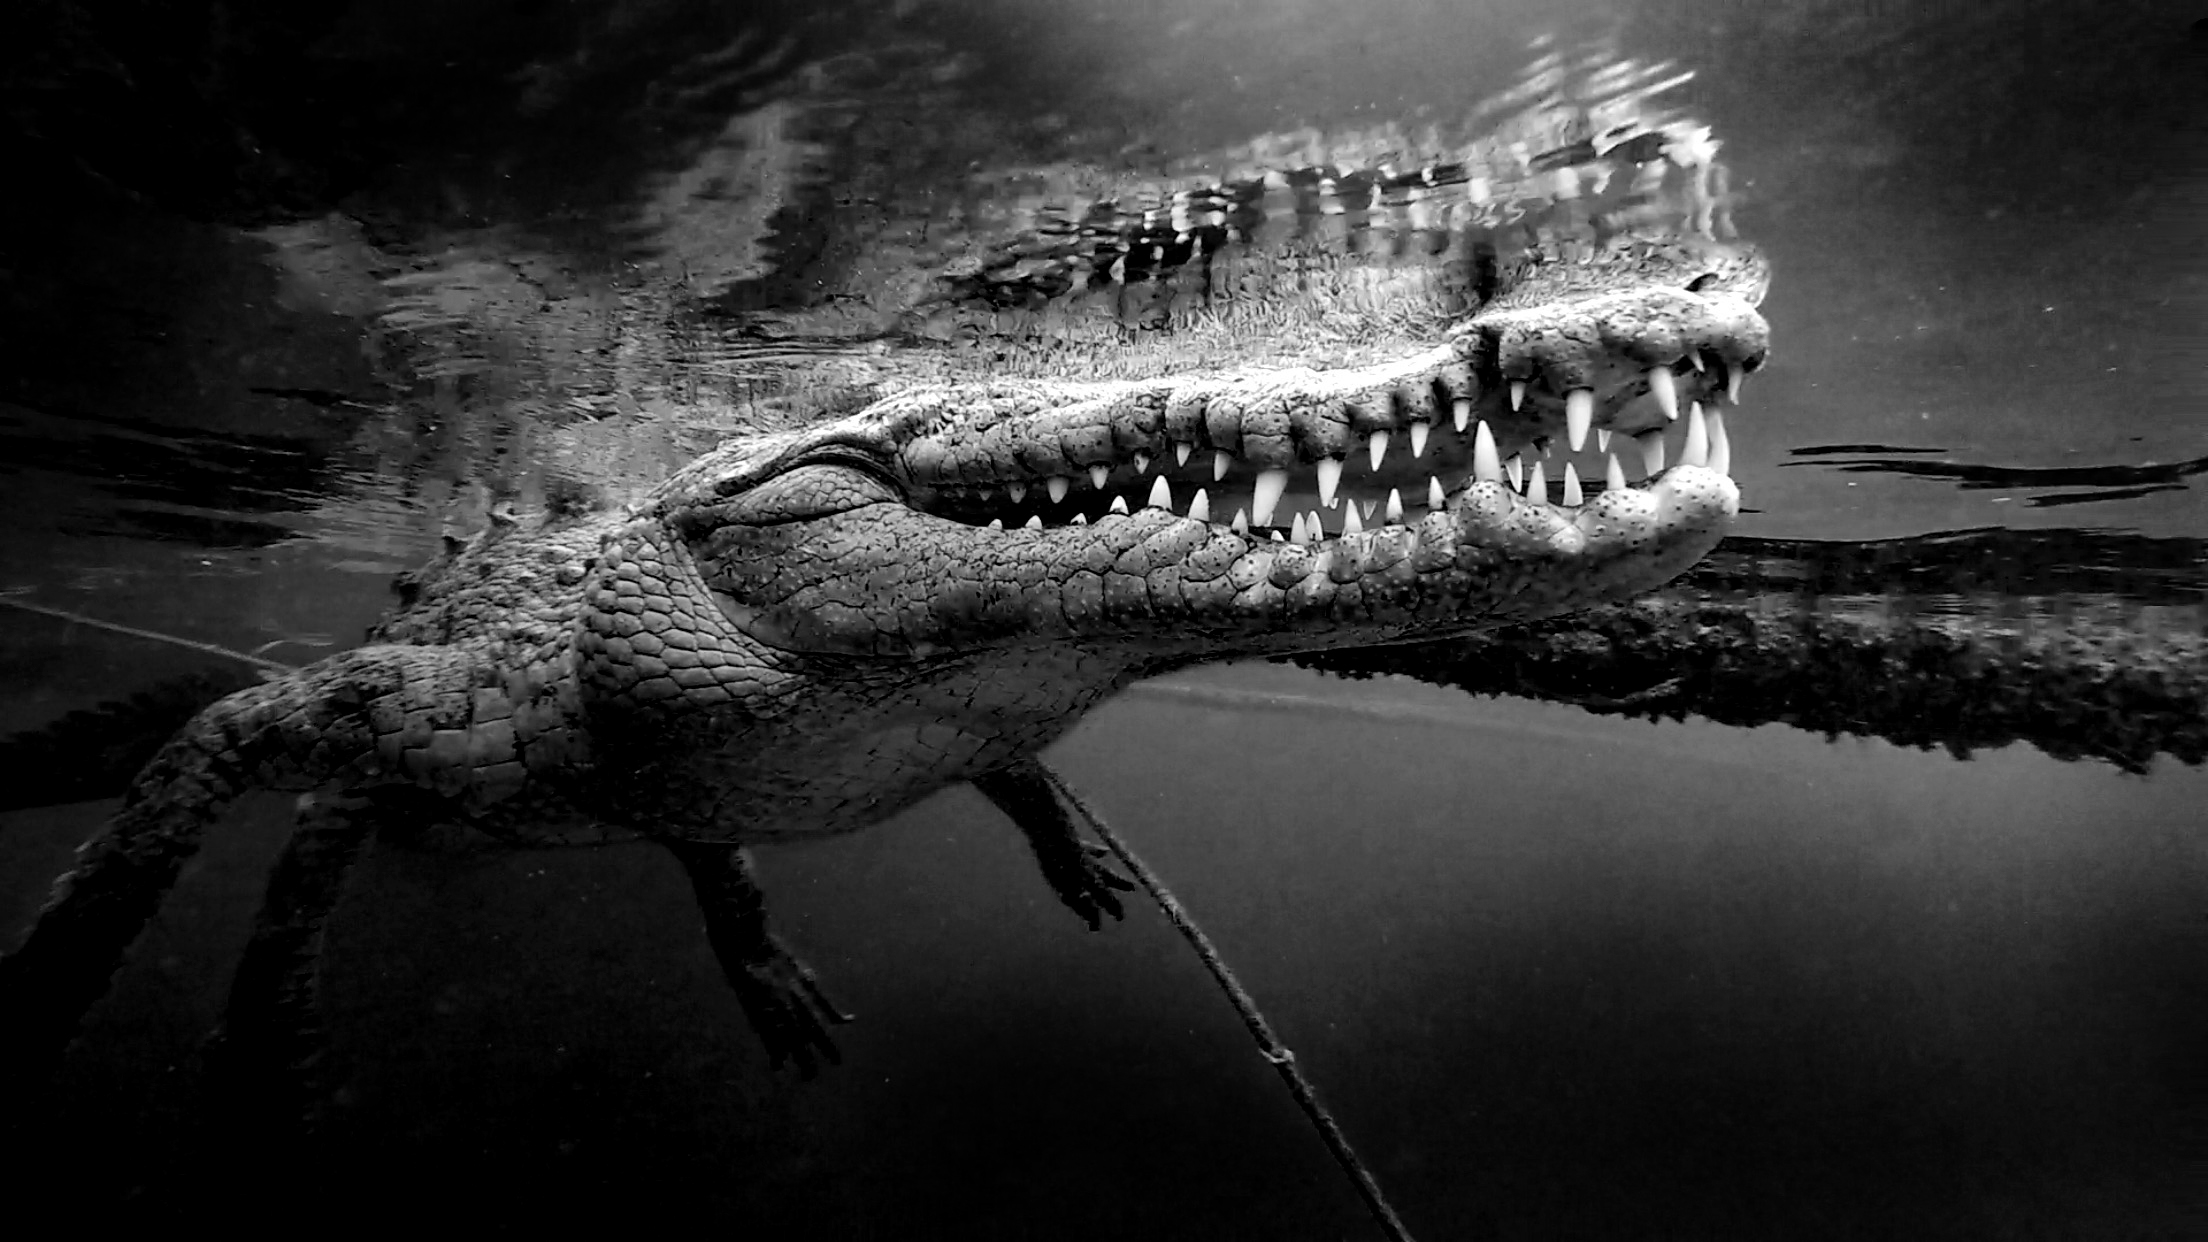 Крокодил арт